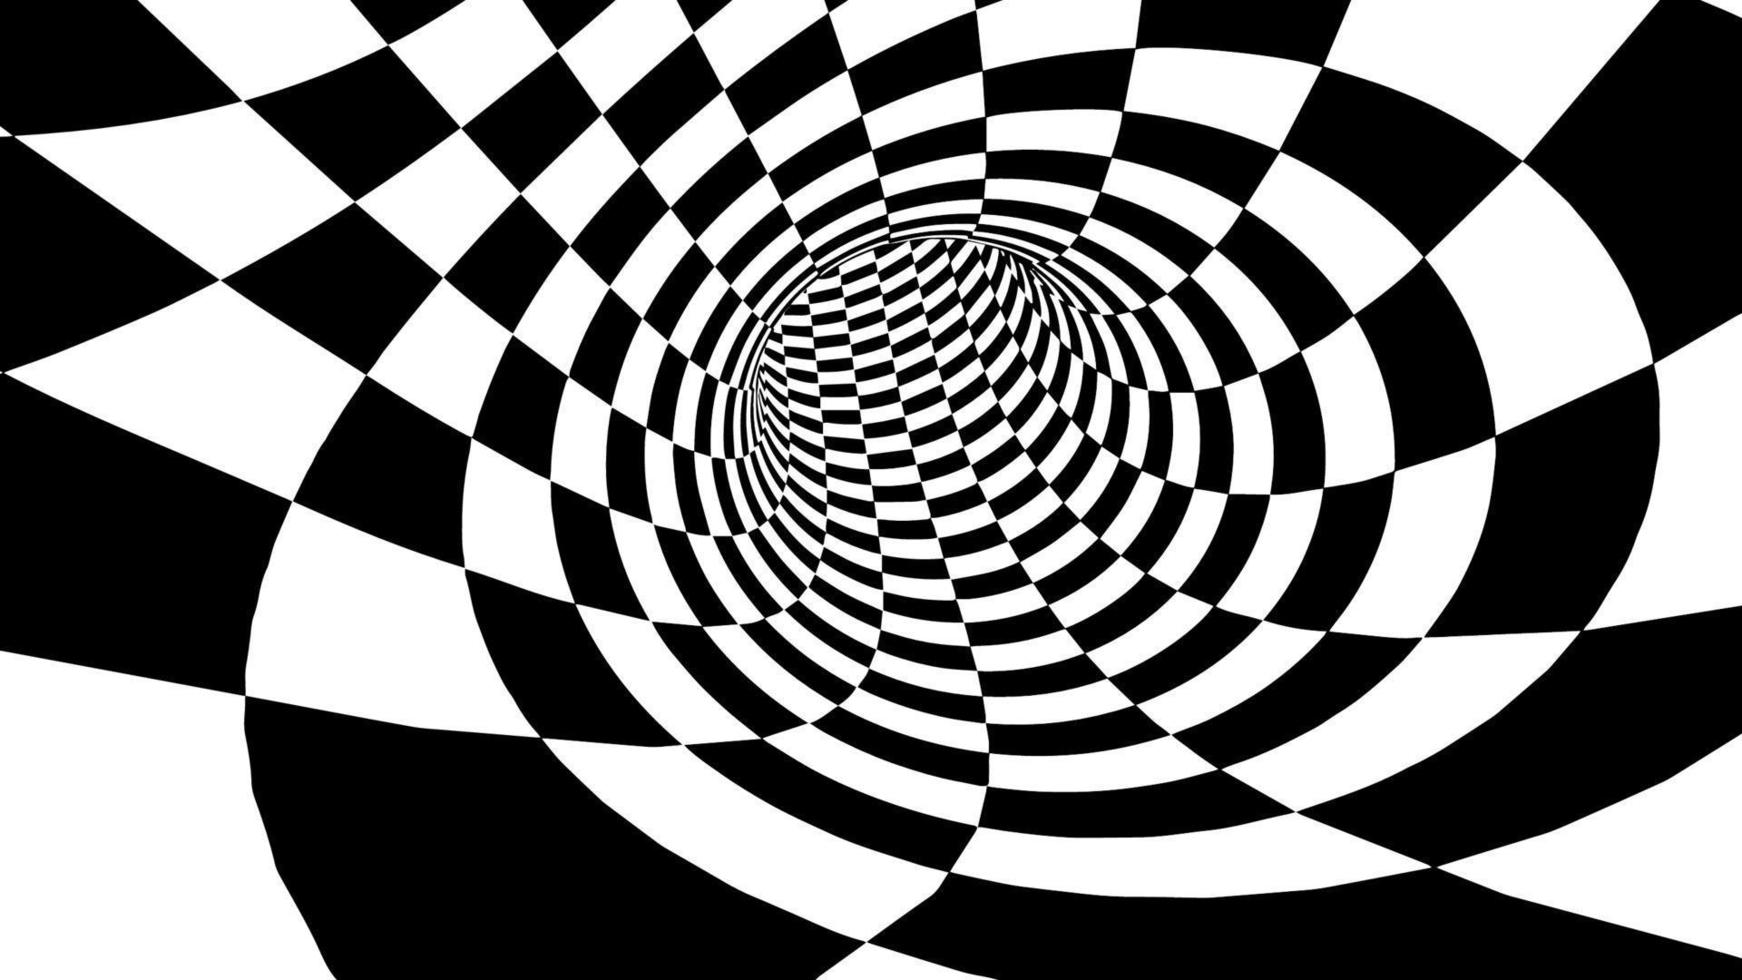 Checkered torus vector illustration EPS 10. Optical illusion vector. Race championship background.